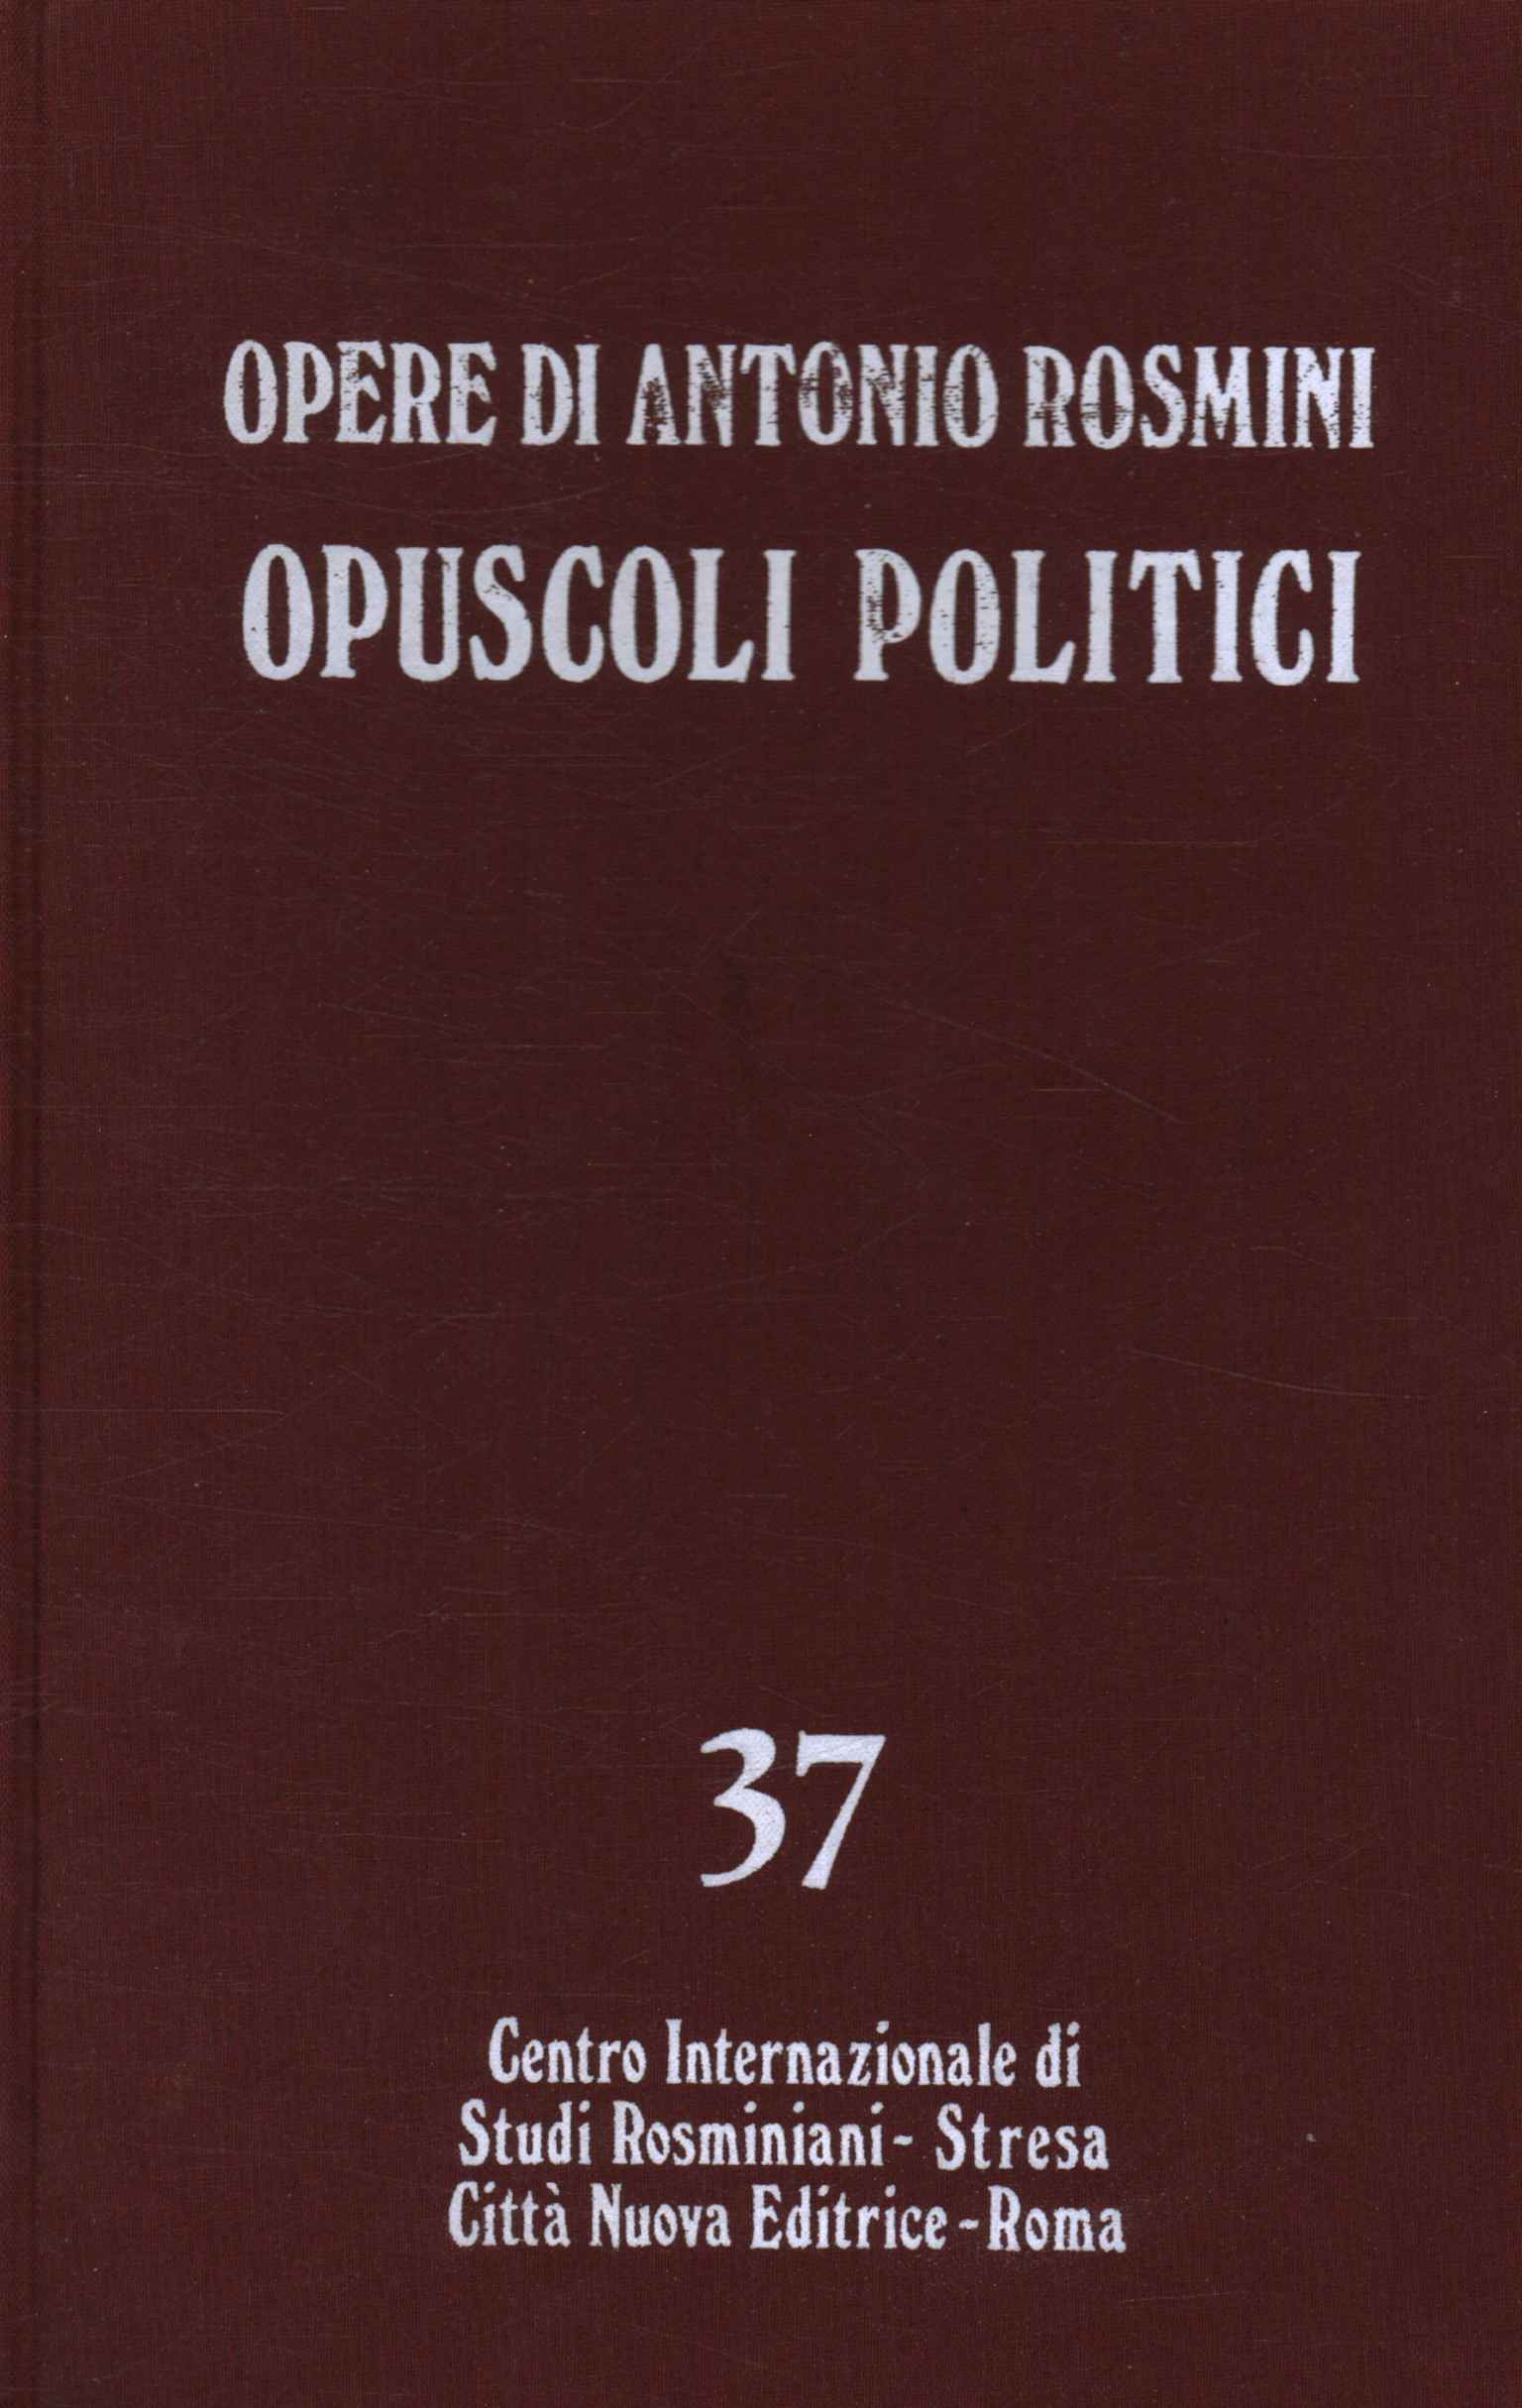 Œuvres d'Antonio Rosmini. Brochures politiques